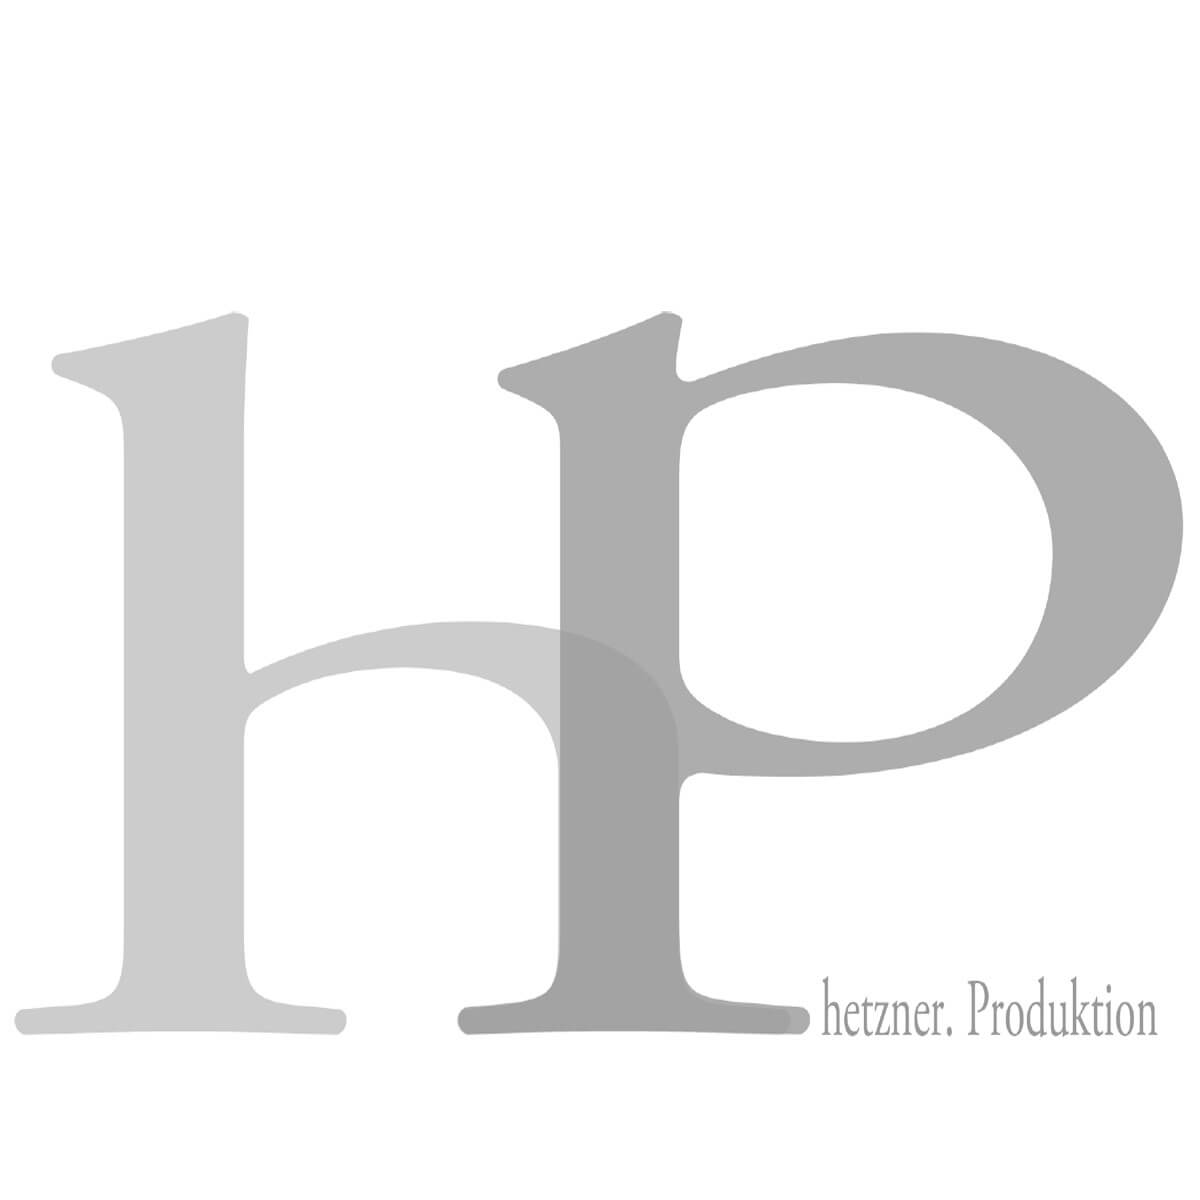 Hetzner.Produktion Logo